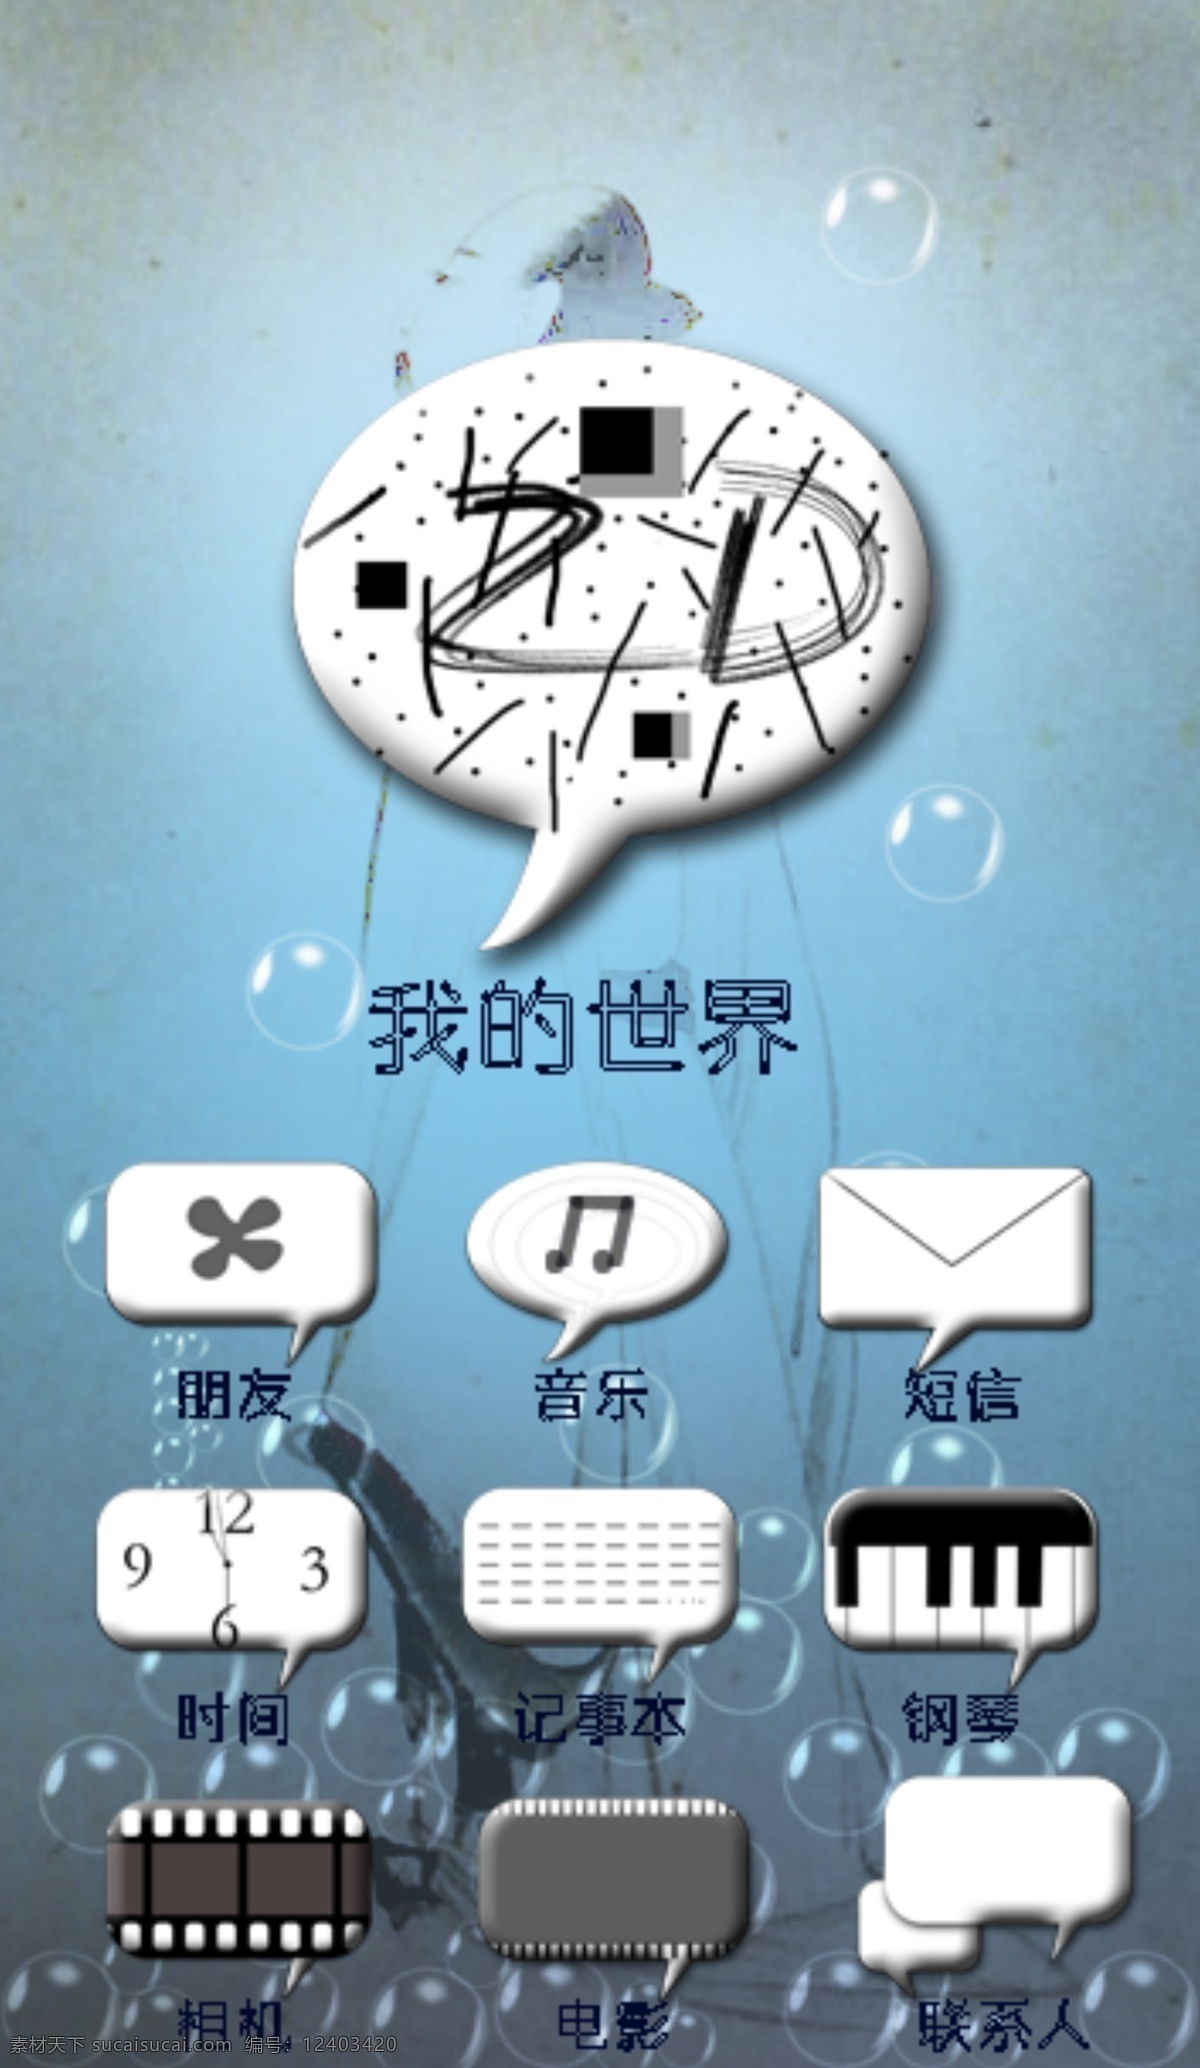 gui 短信 界面 朋友 手机 手机界面 图标设计 音乐 源文件 我的世界 移动设备 移动界面设计 古人 祖先 背景 app app界面